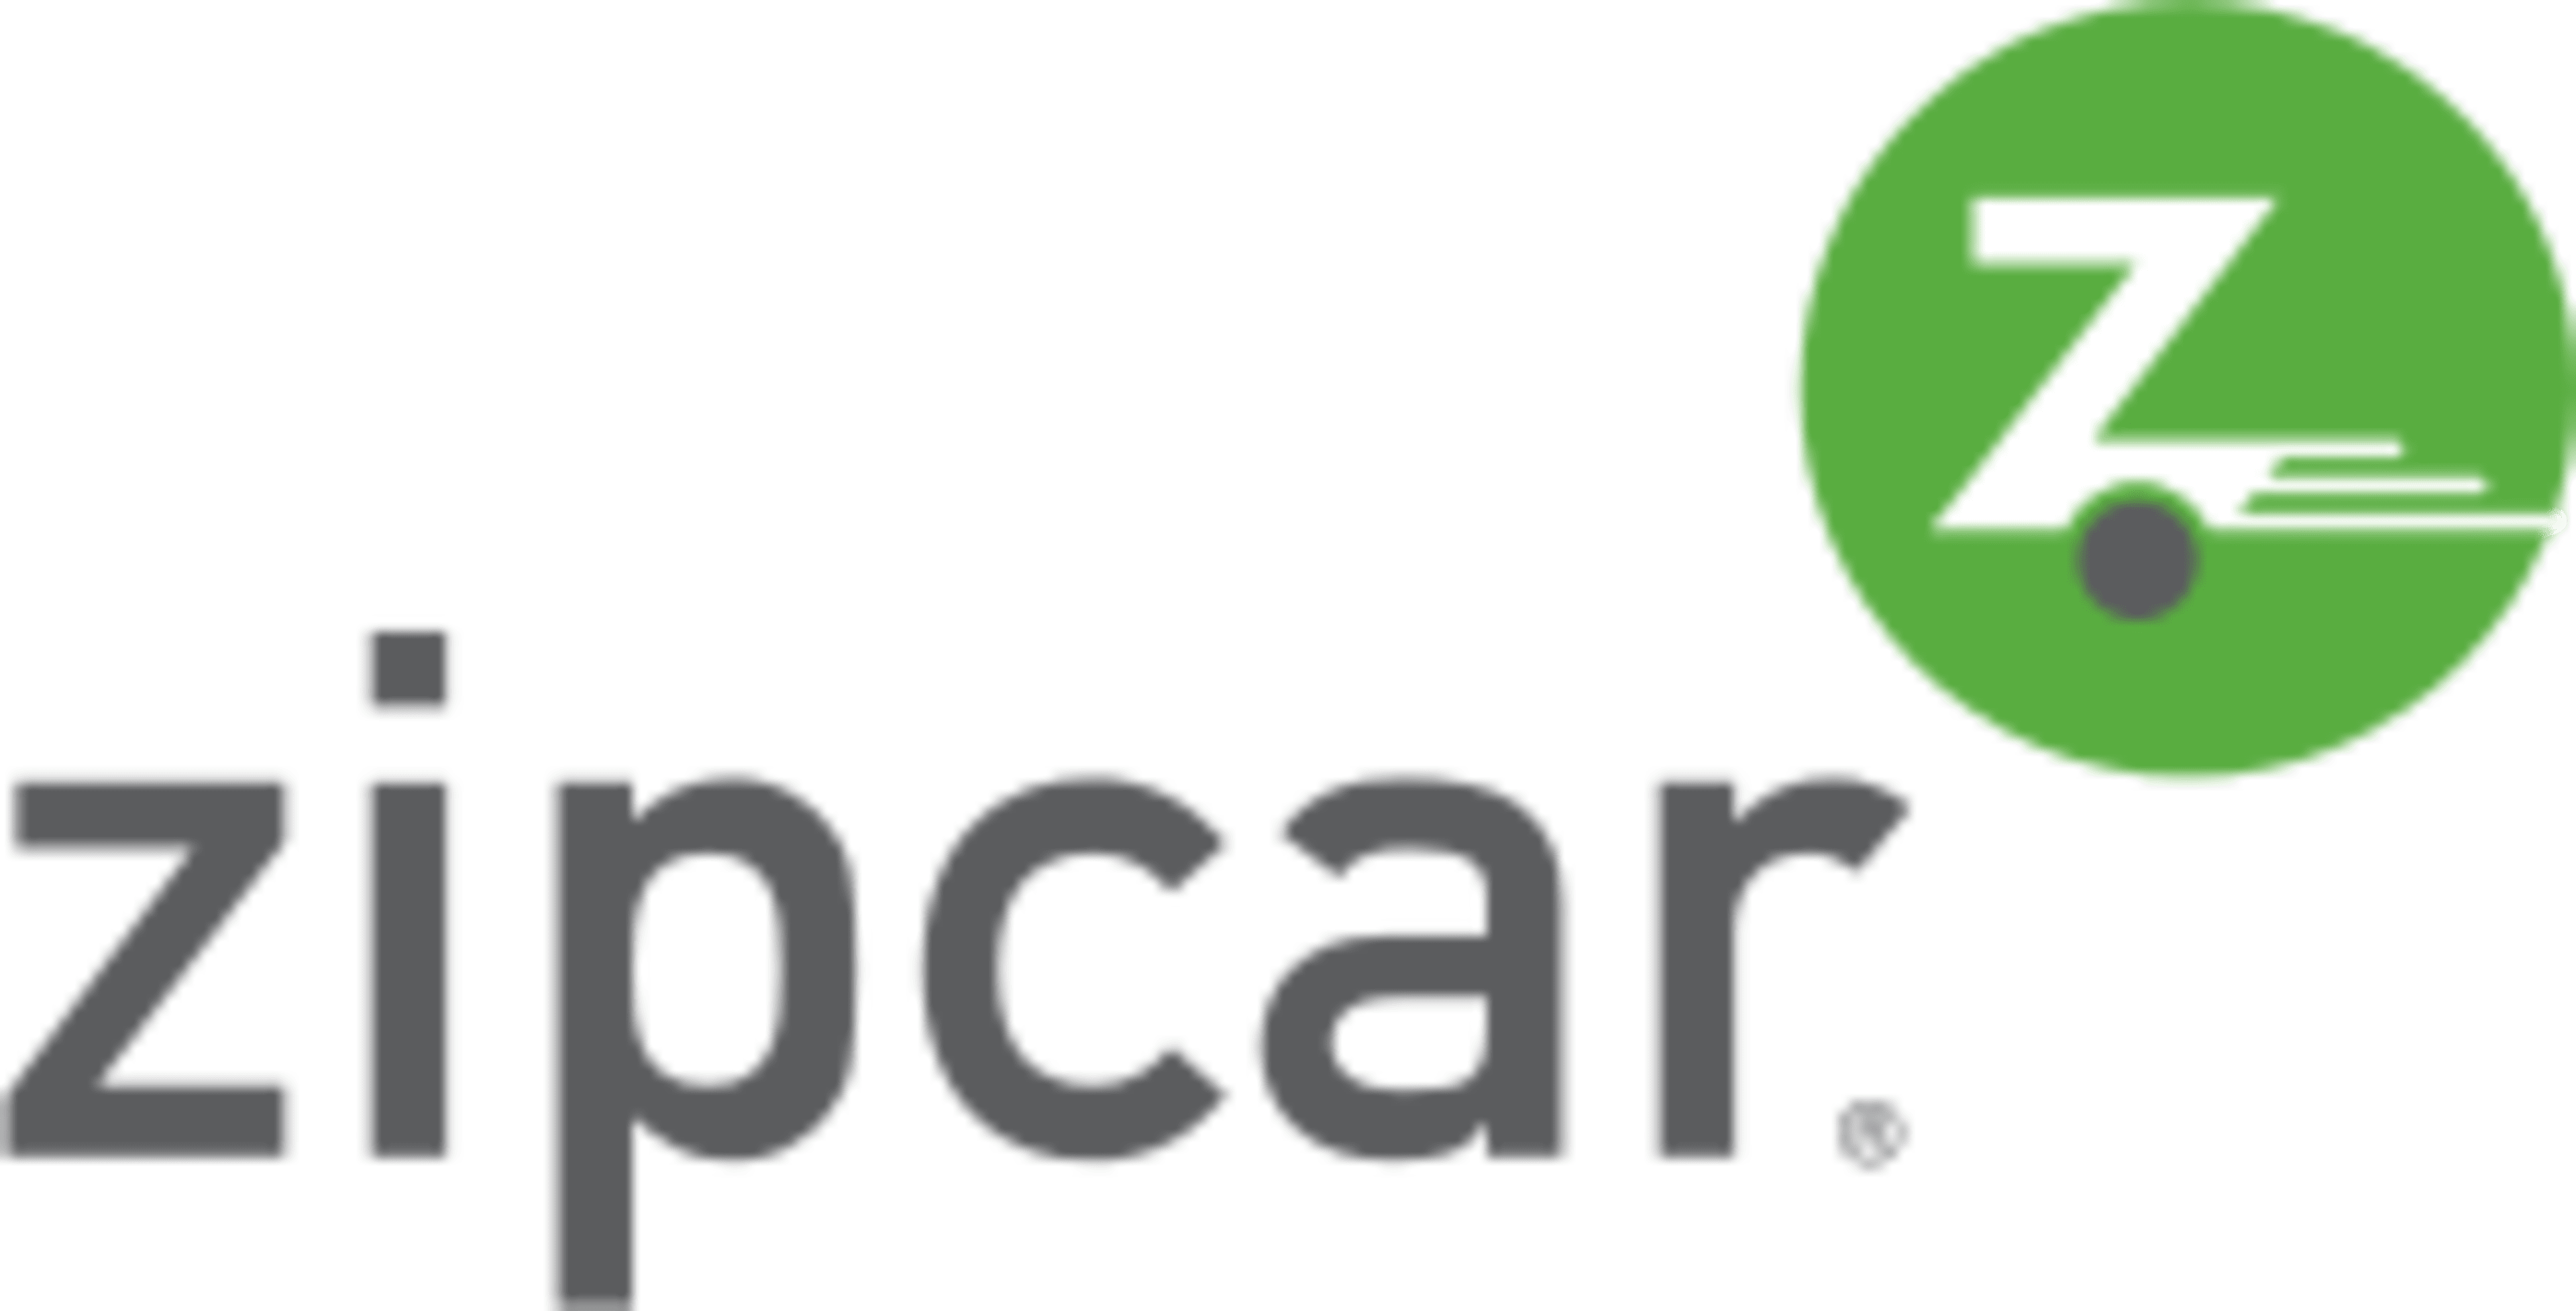 Zipcar Code